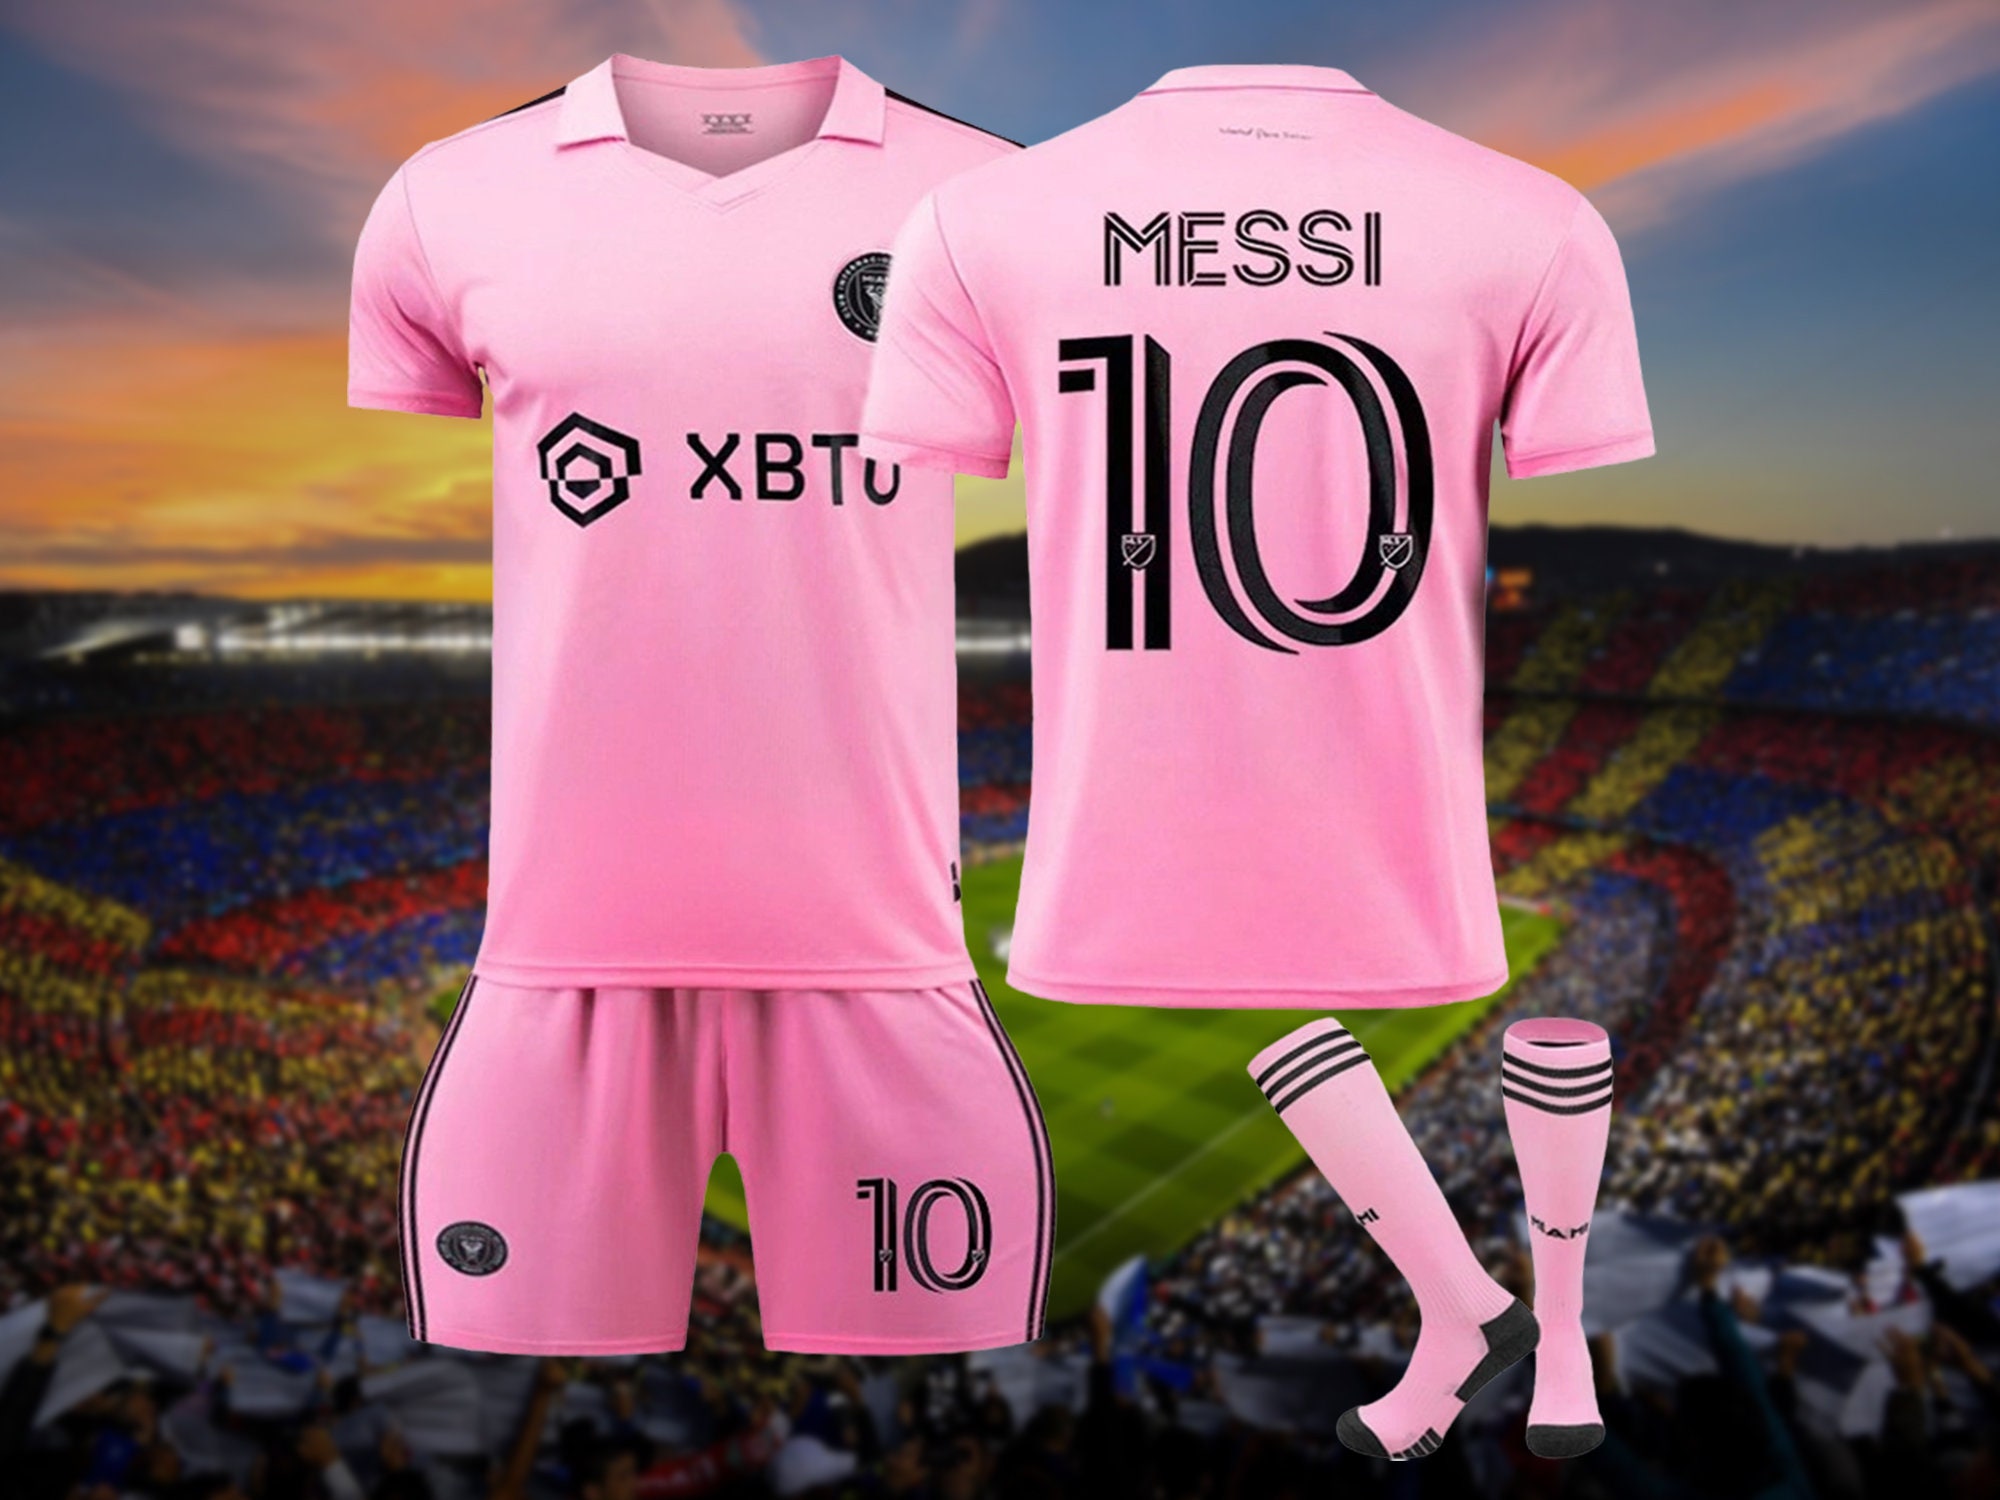 Argentina No.10 Messi Jersey (26 Yards), Argentina Soccer Jersey 2022,  Messi Shirt Short Sleeve Football Kit, Kids/Adult Soccer Fans Gifts 